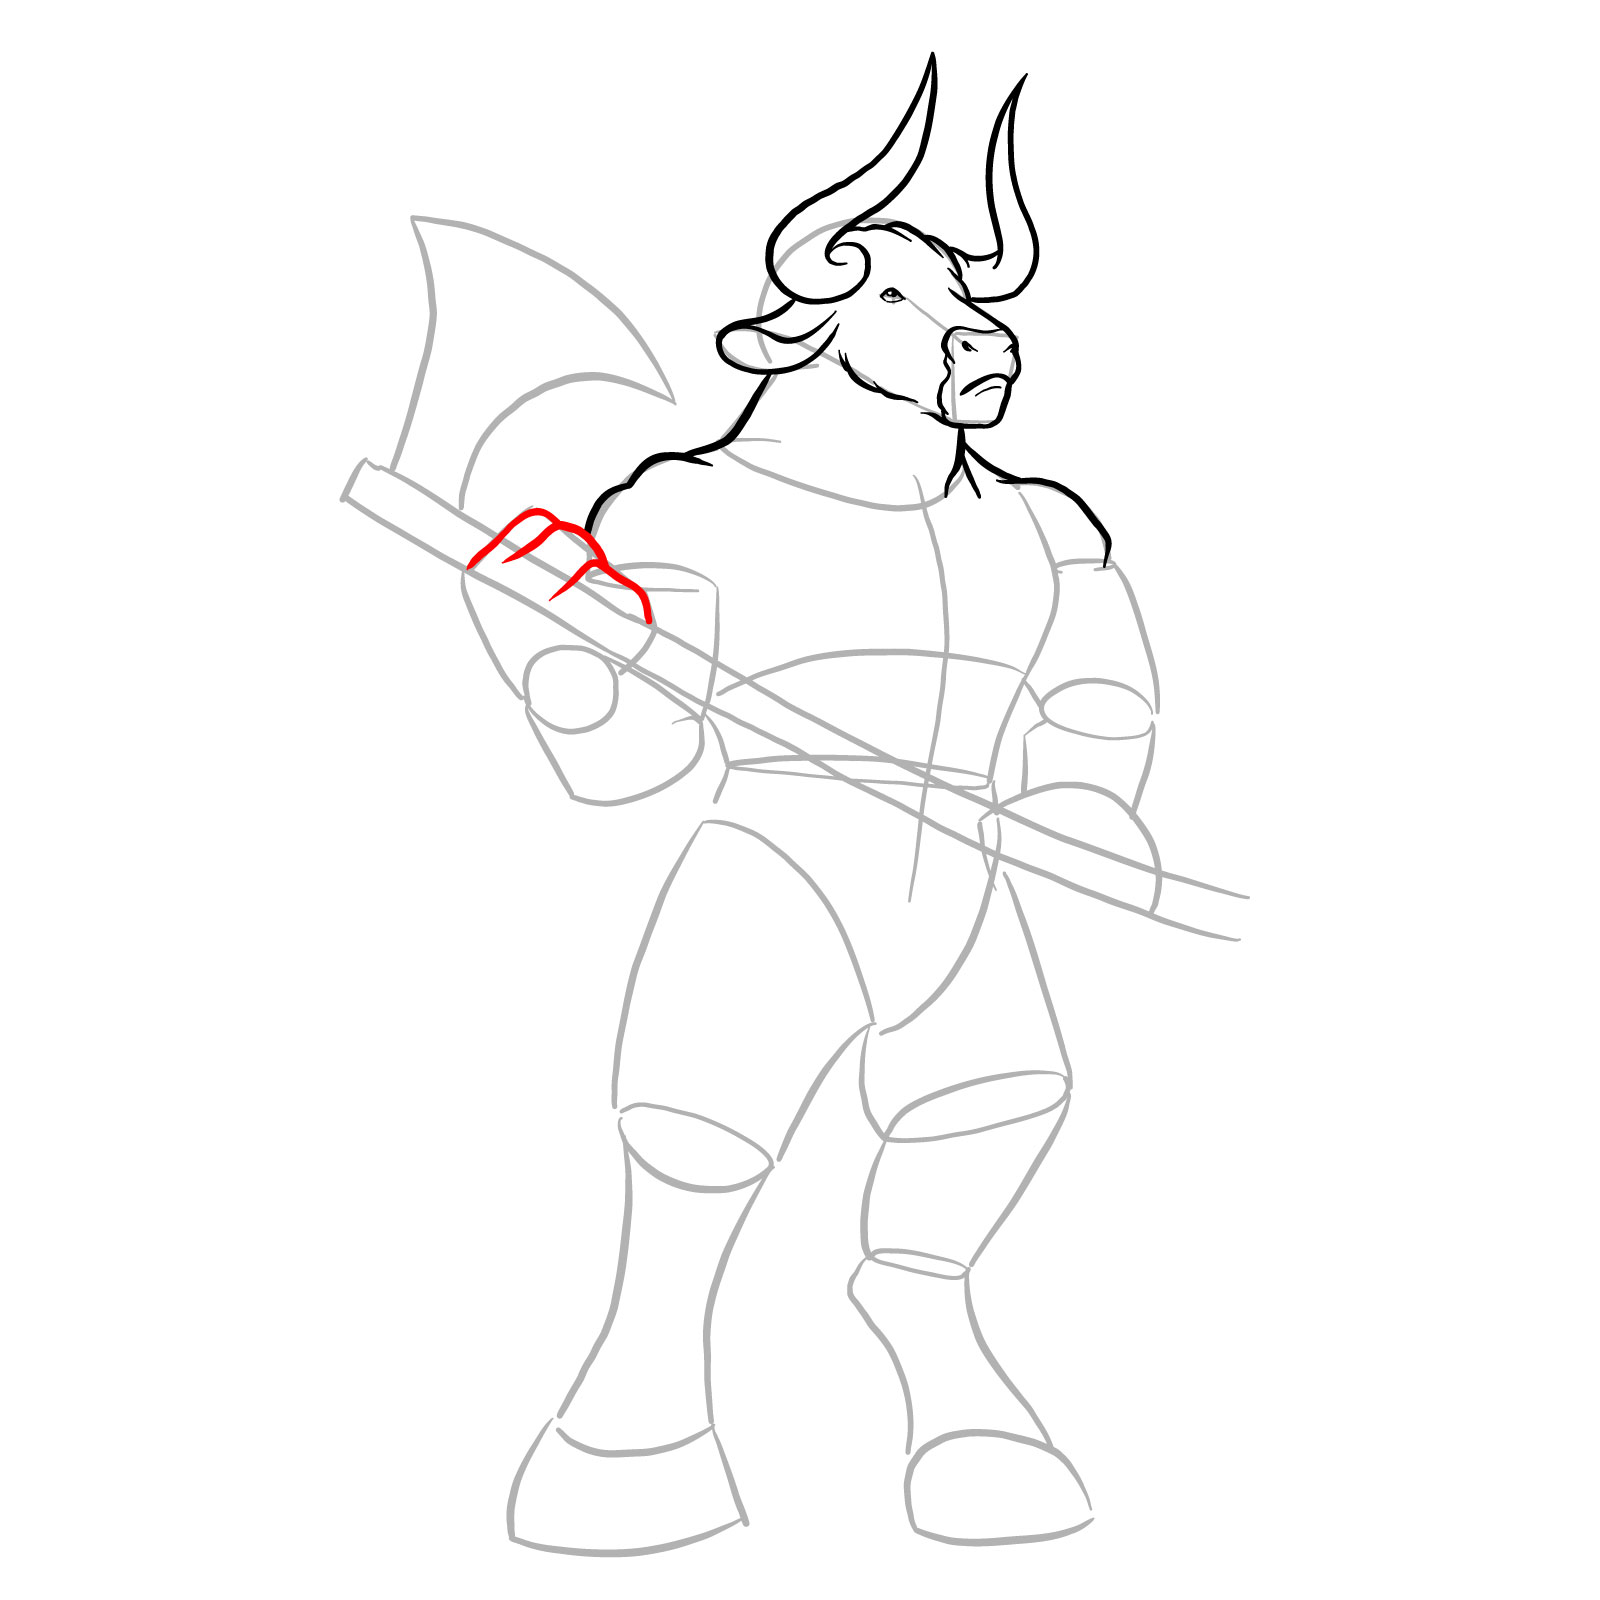 How to draw a Minotaur - step 15